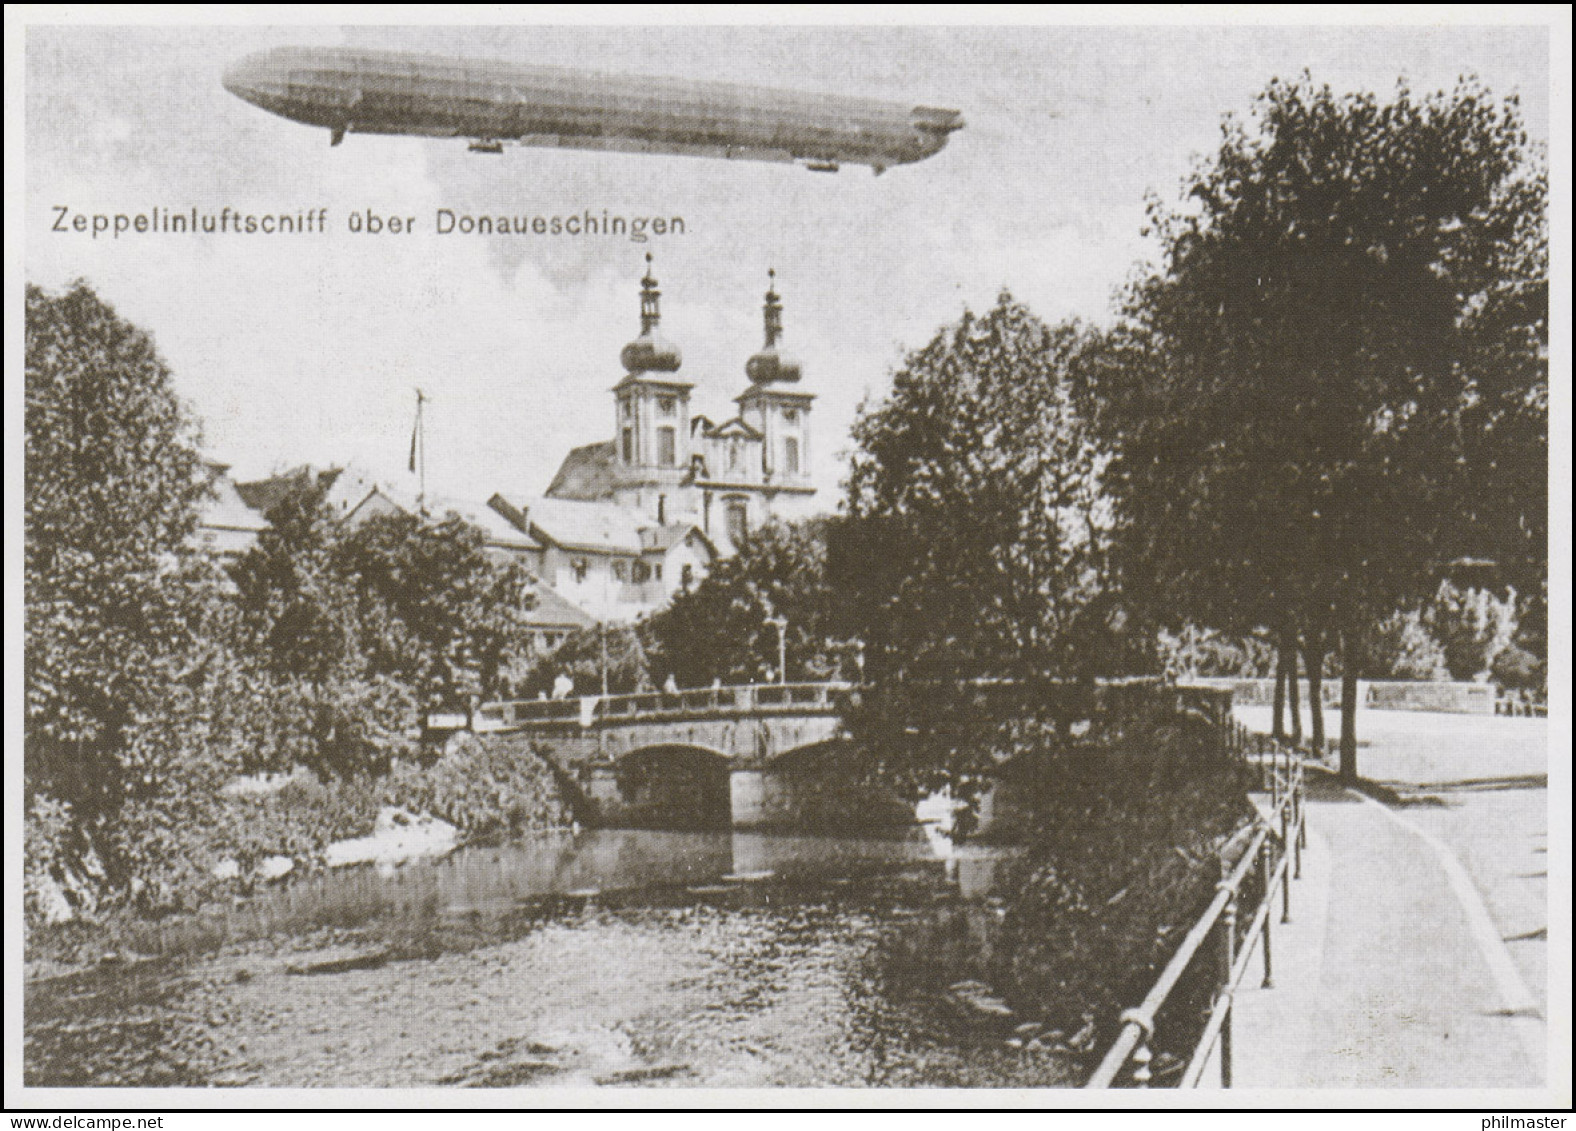 Luftschiffspost DKL 49 PESTALOZZI Briefmarkenausstellung DONAUESCHINGEN 21.5.98 - Zeppelins